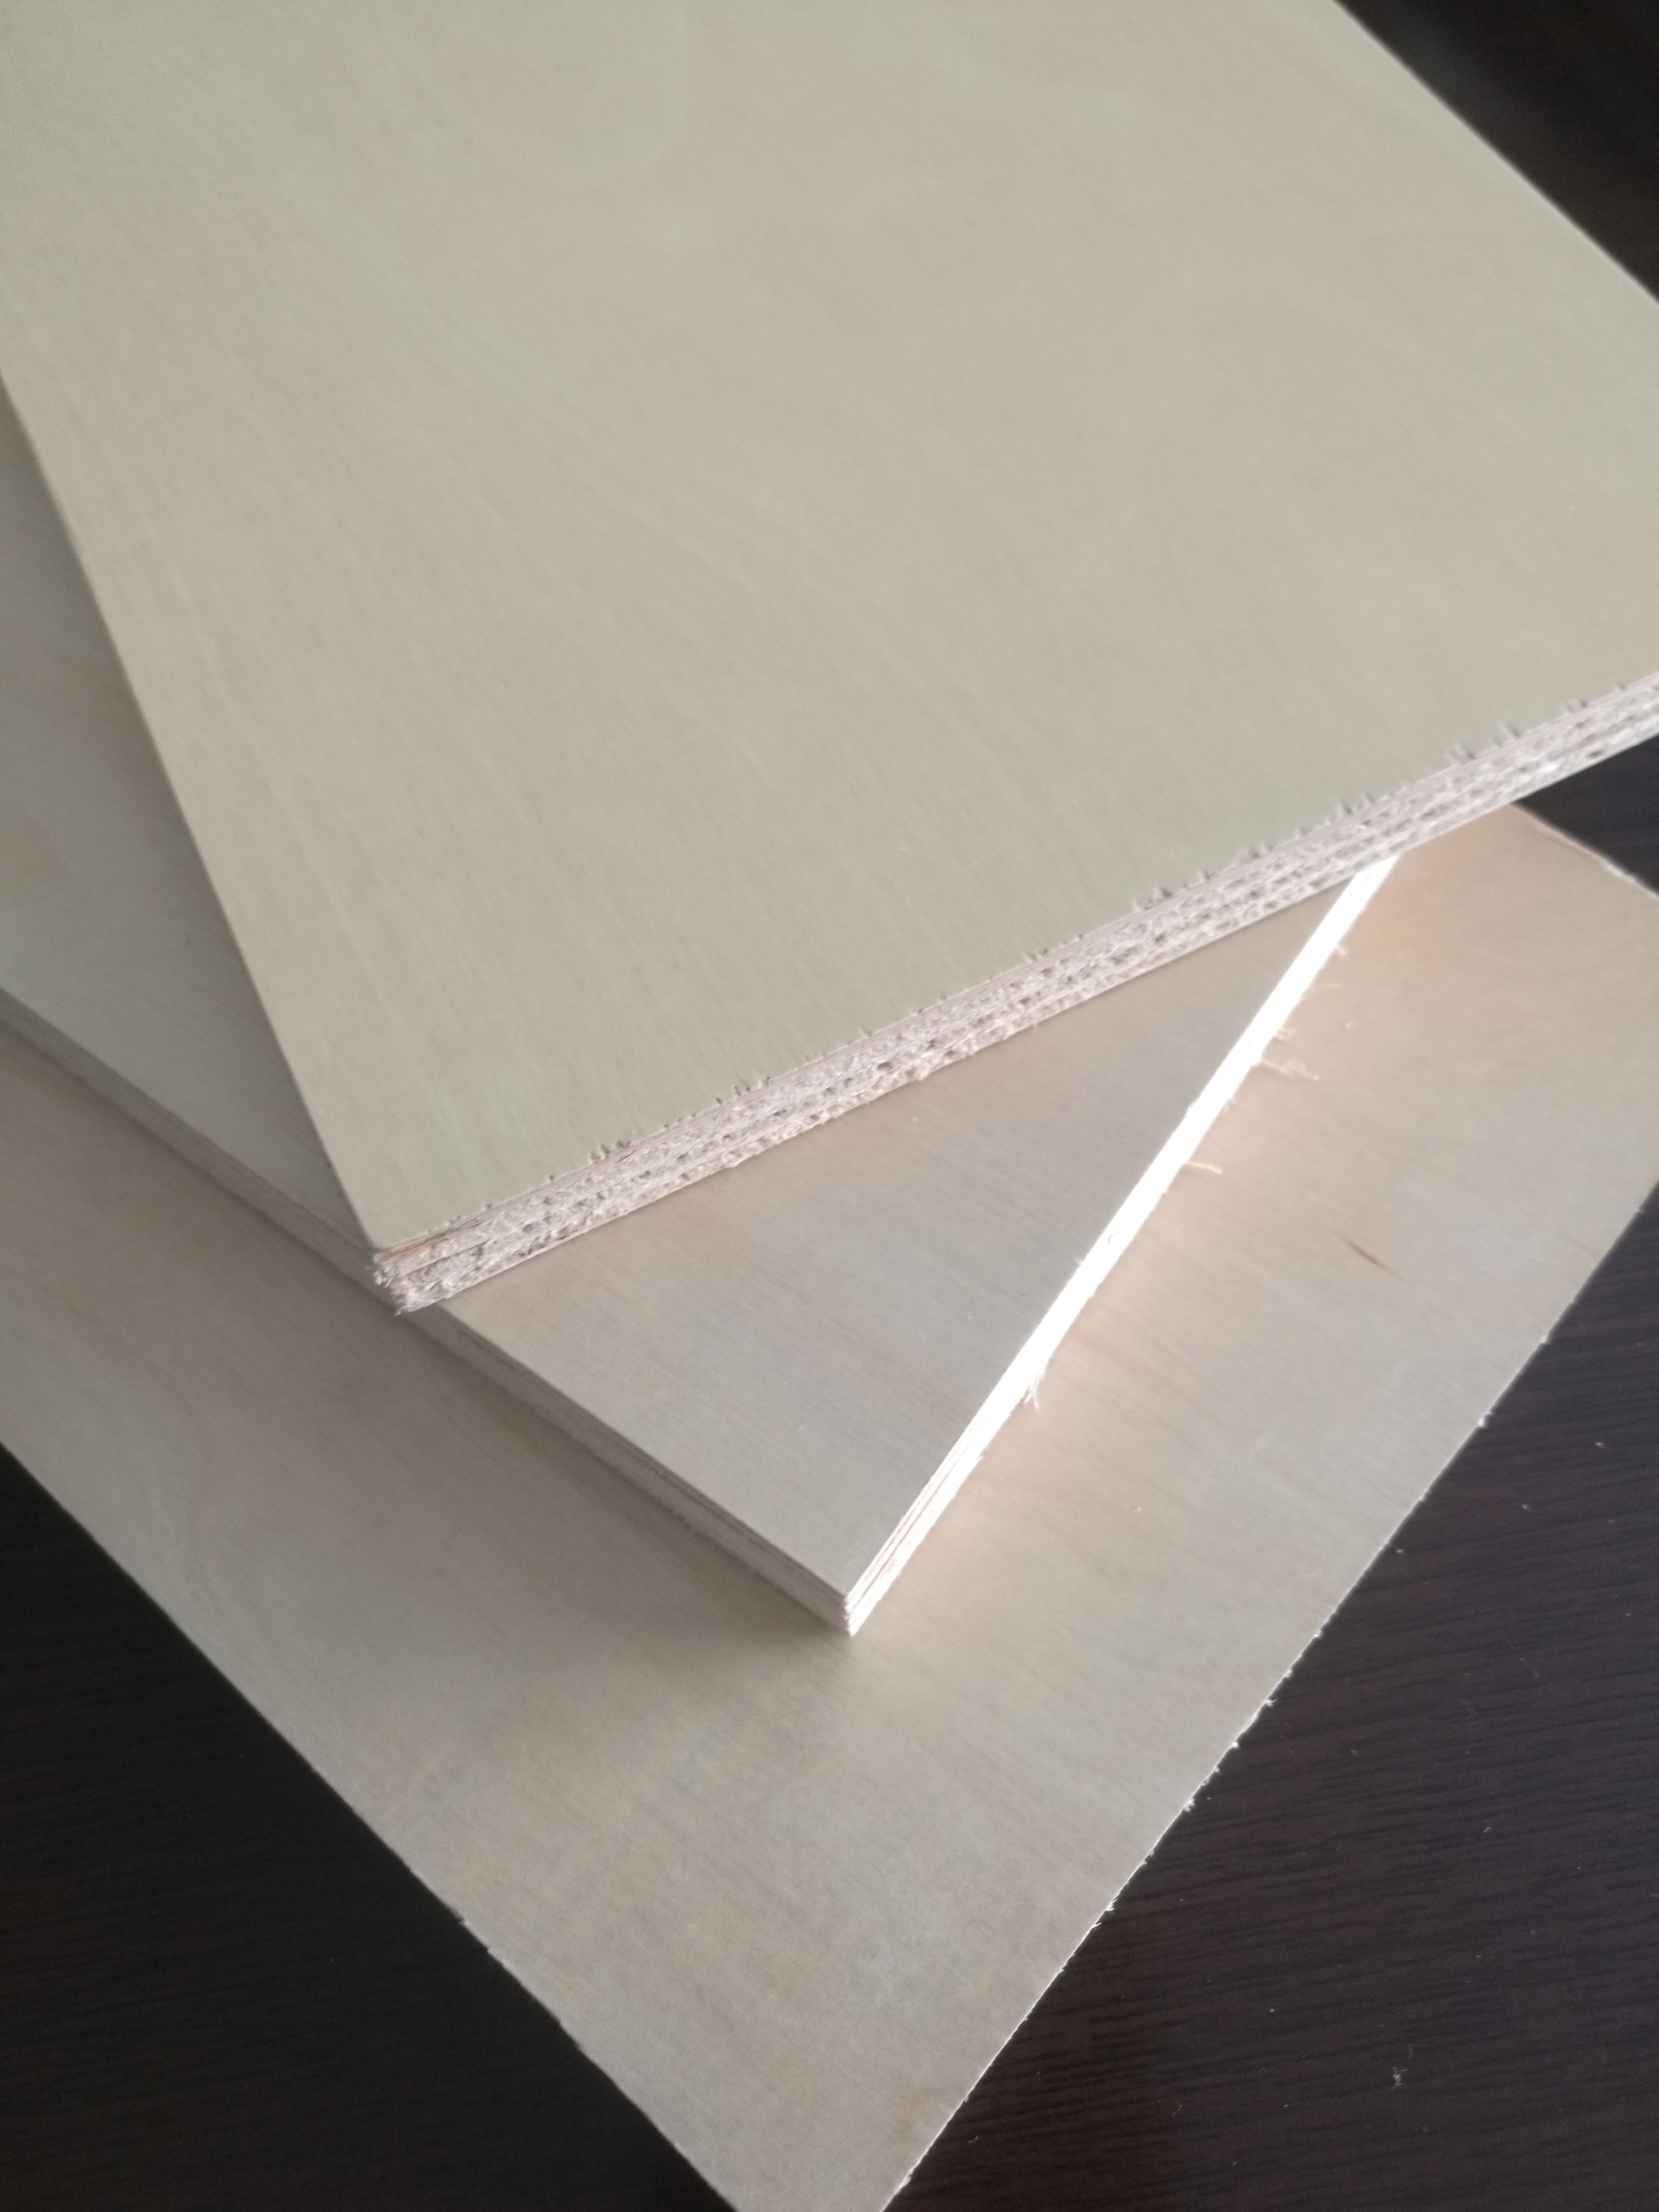 UV coated birch plywood